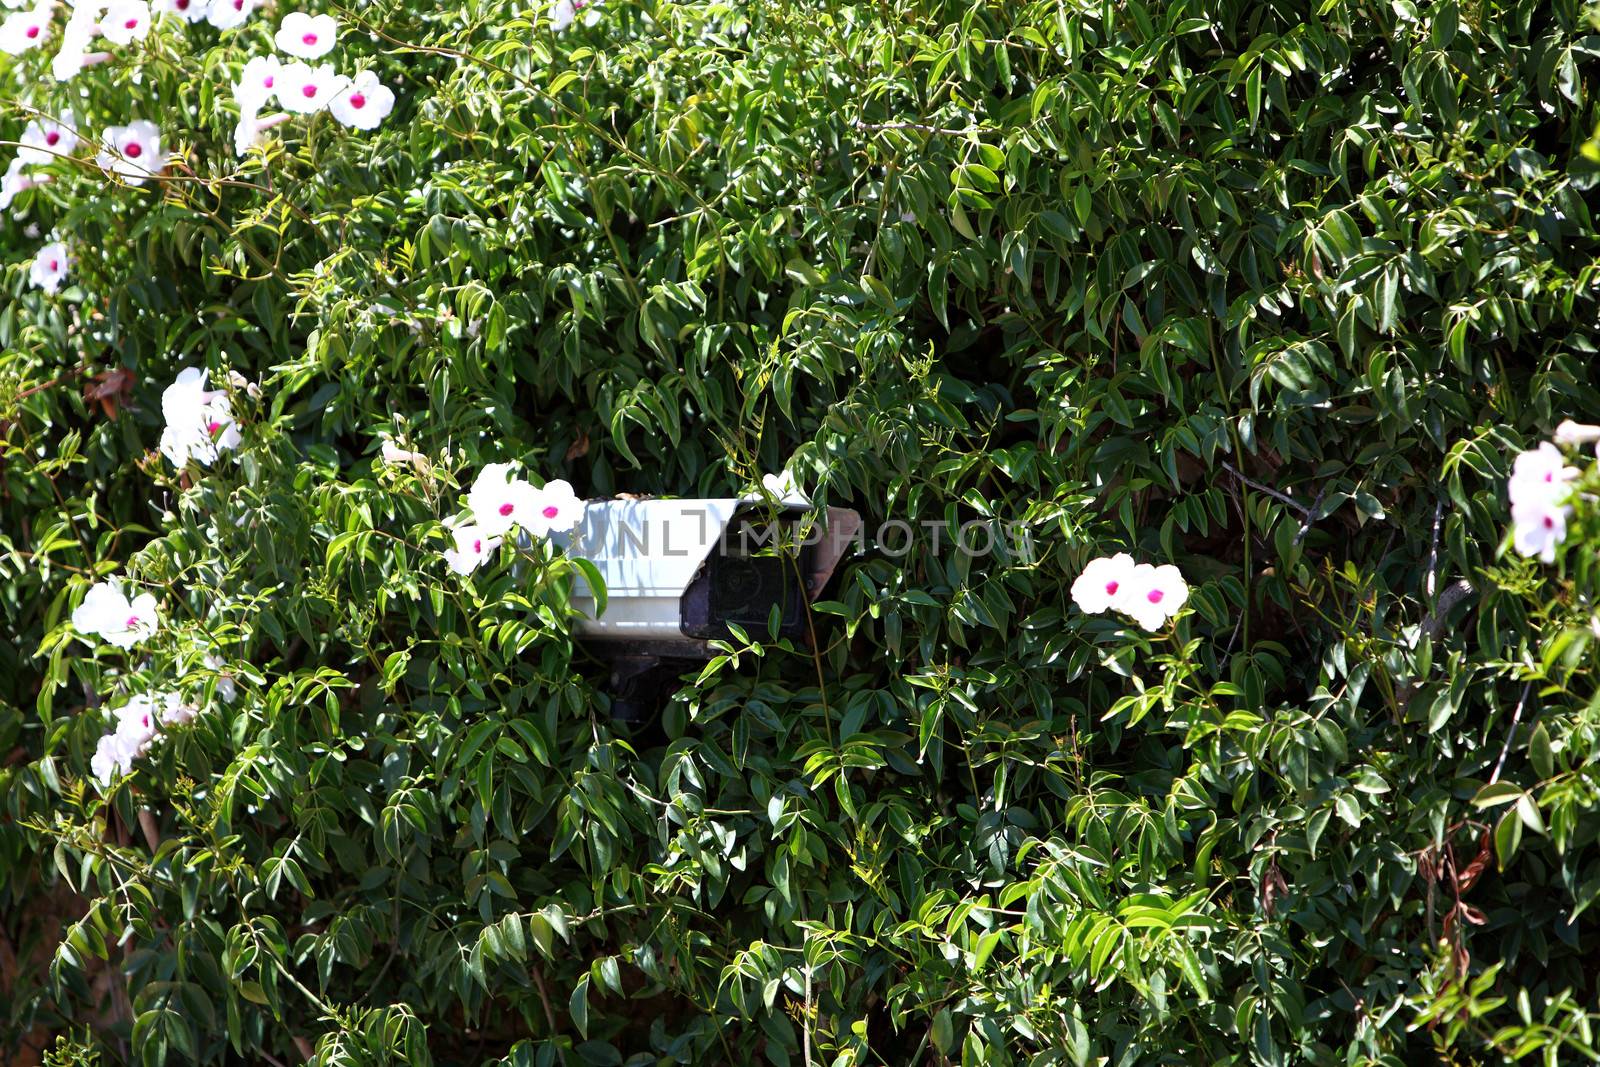 Security camera hidden in greenery by Farina6000